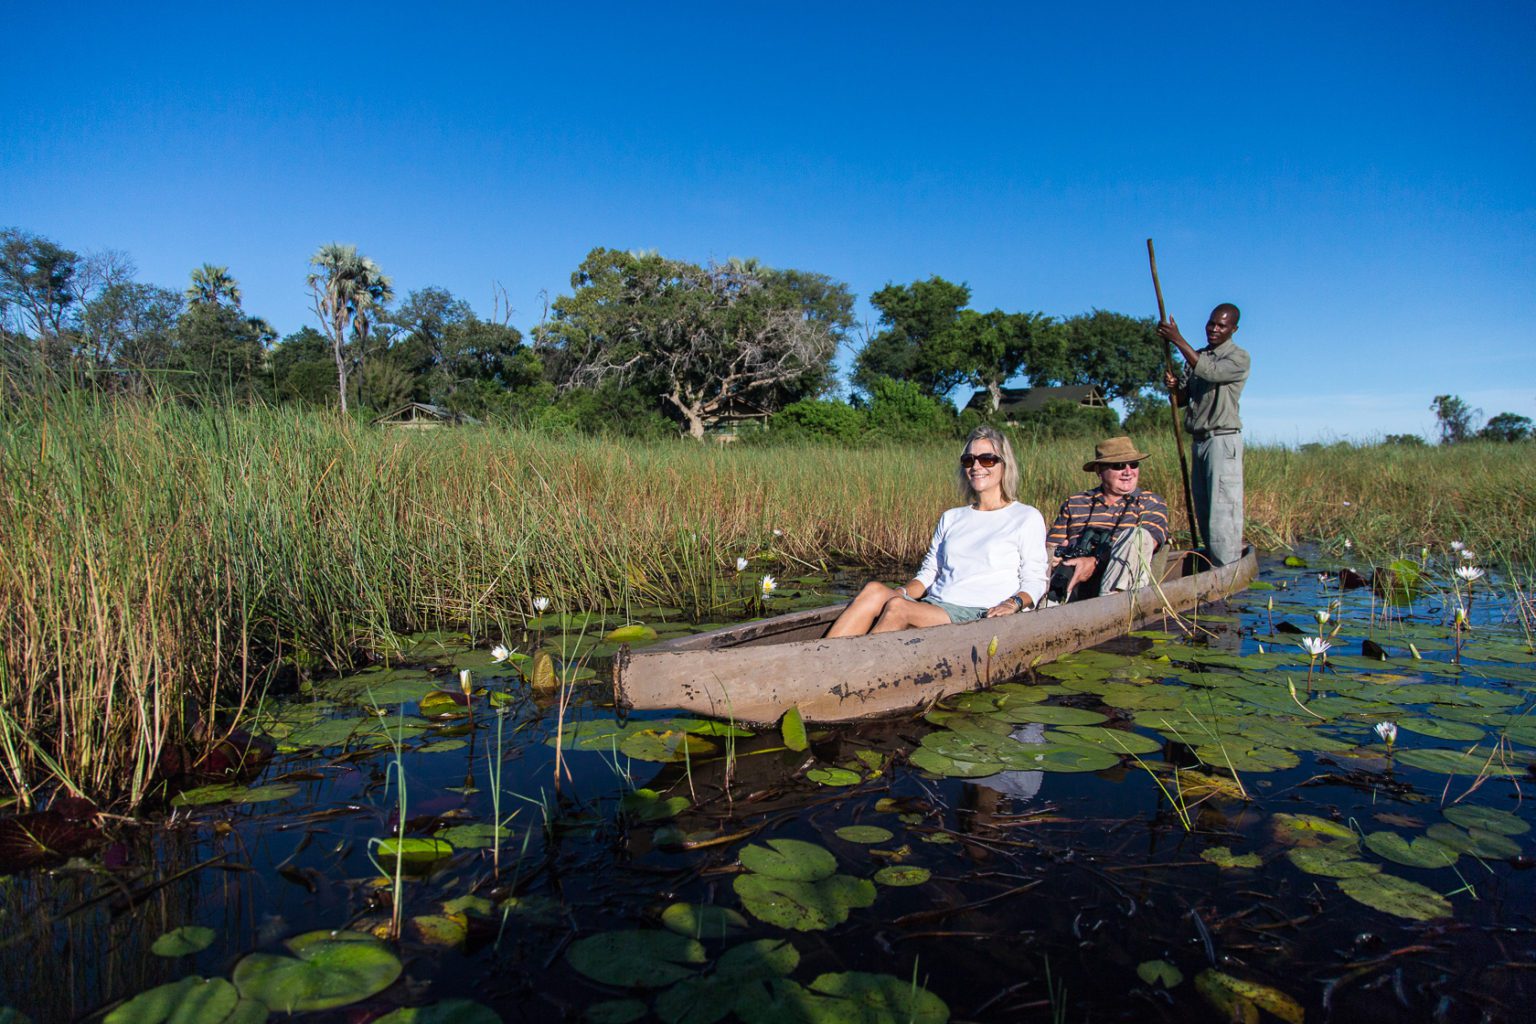 Seba Camp guests on a water safari with guide botswana on our off-grid Botswana safari